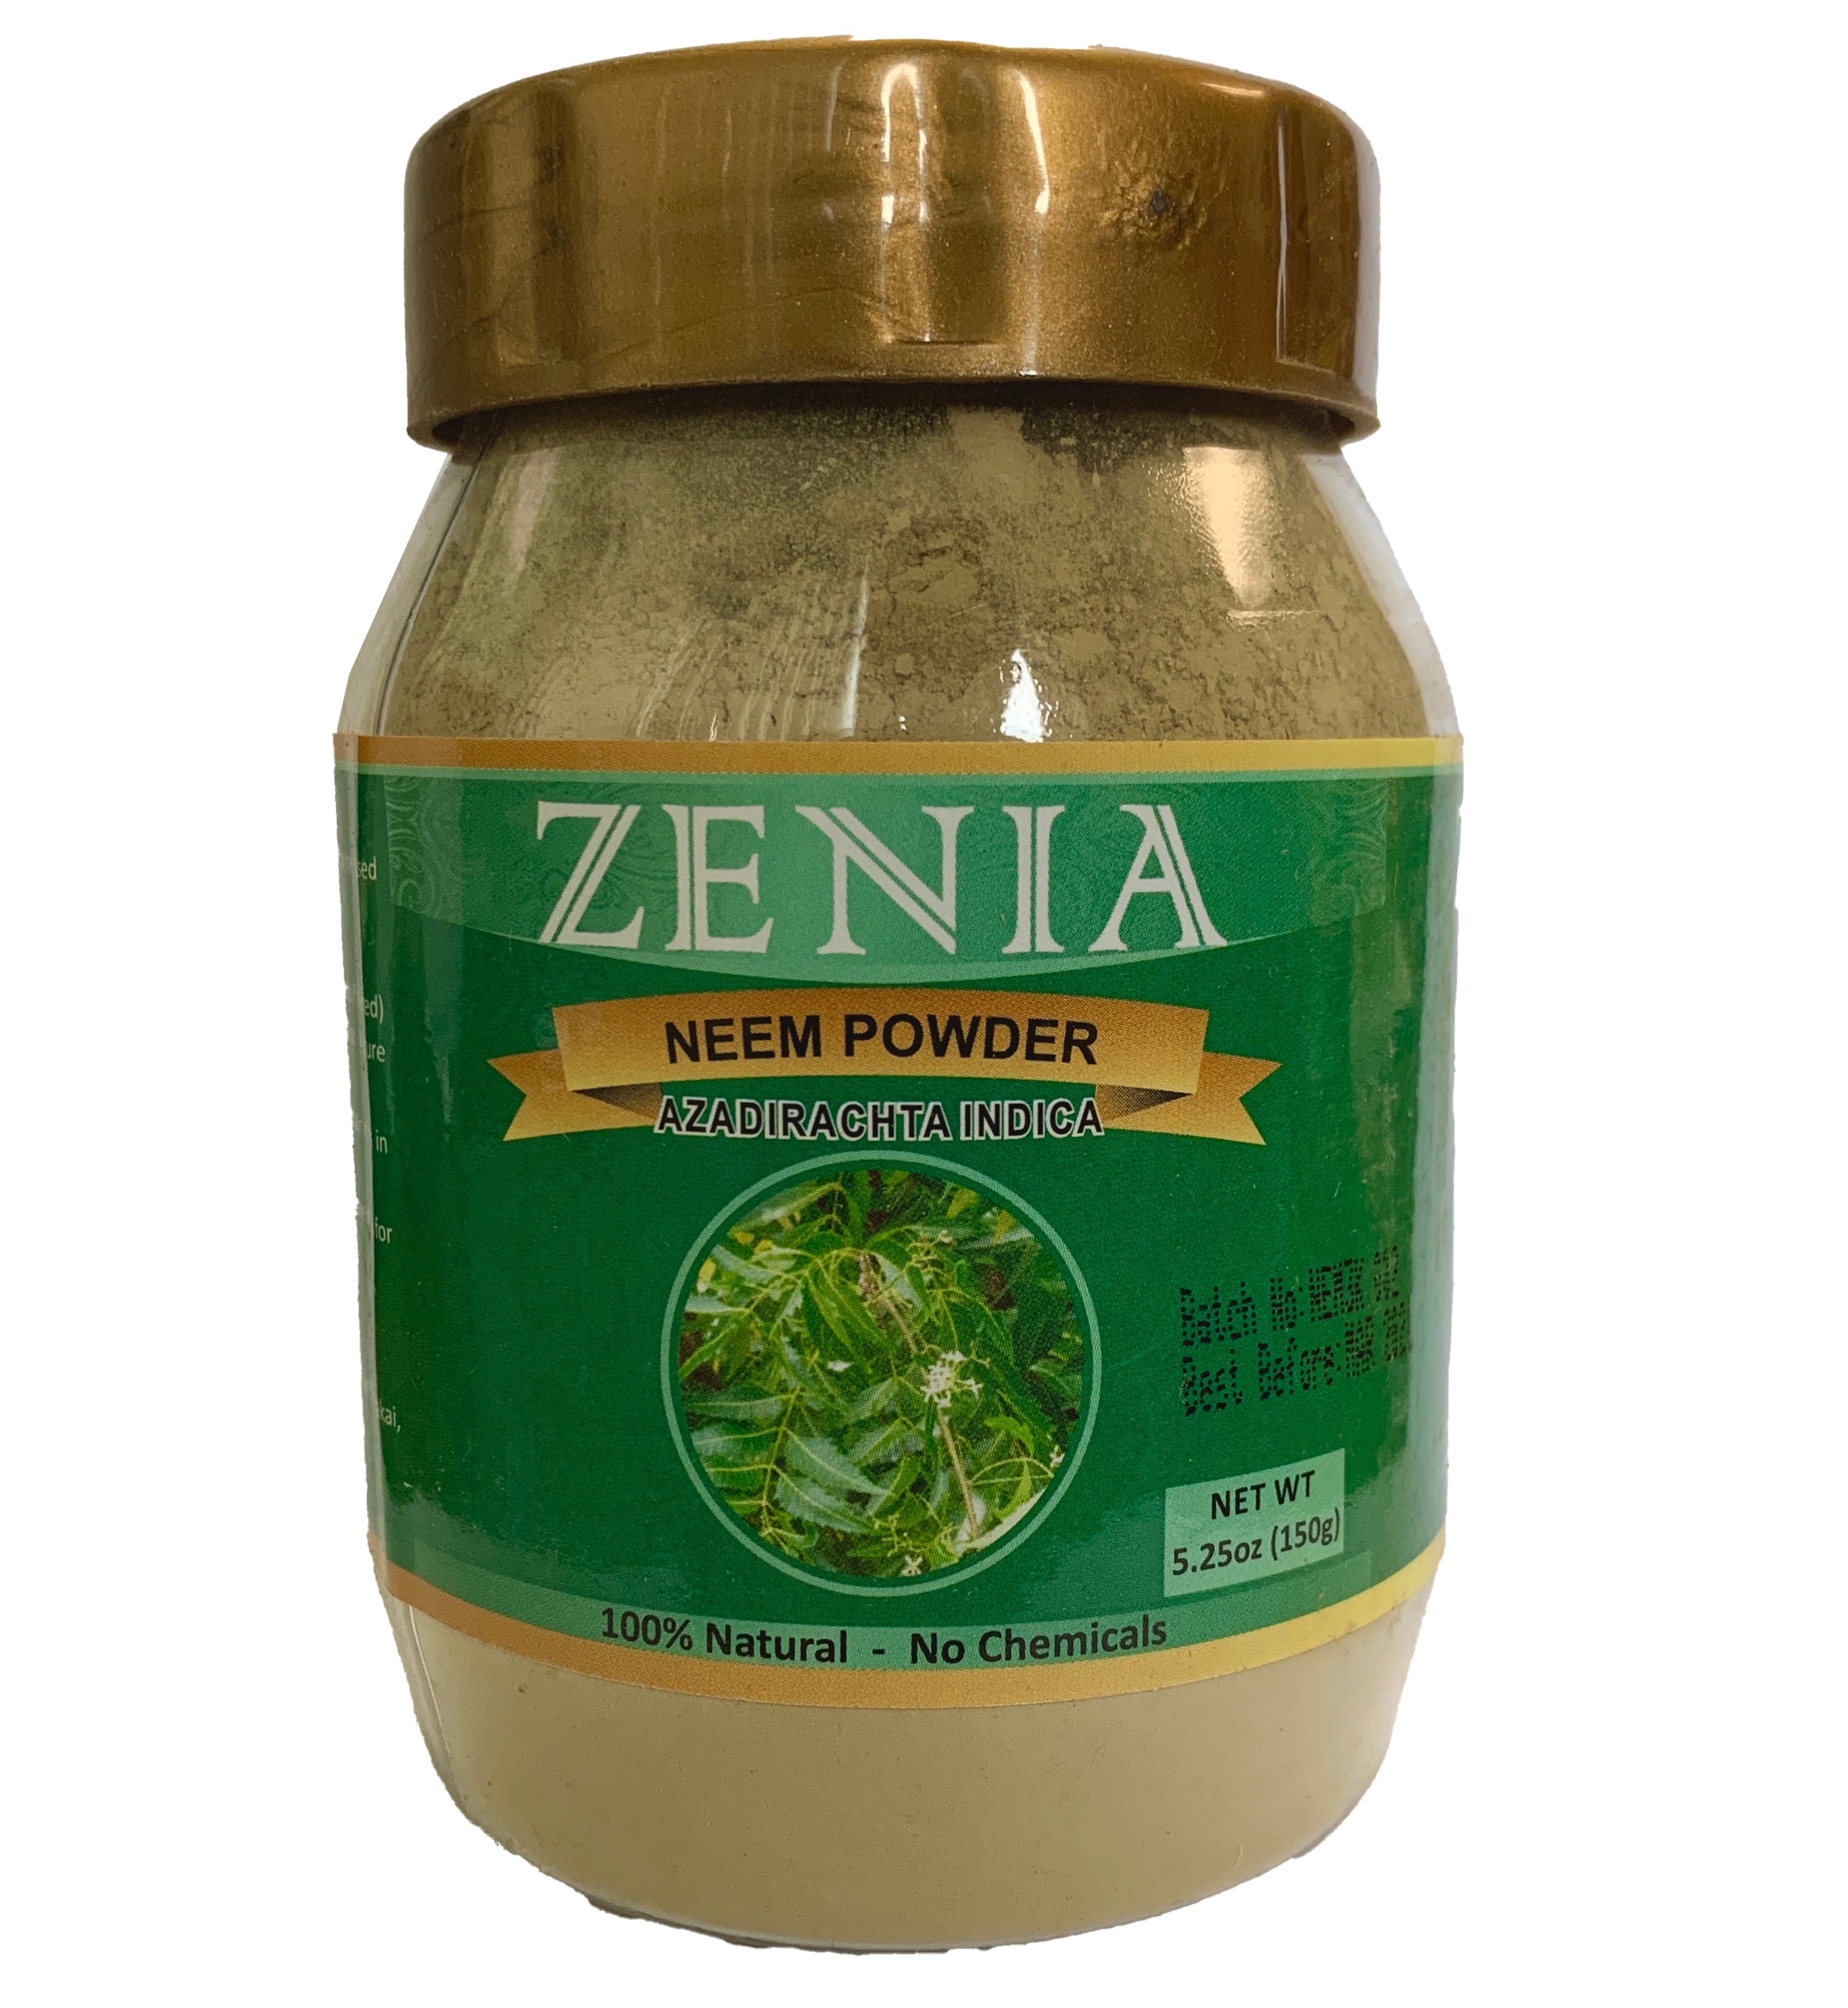 Zenia Pure Neem Powder Jar Edible Grade For Hair, Skin, Health Care